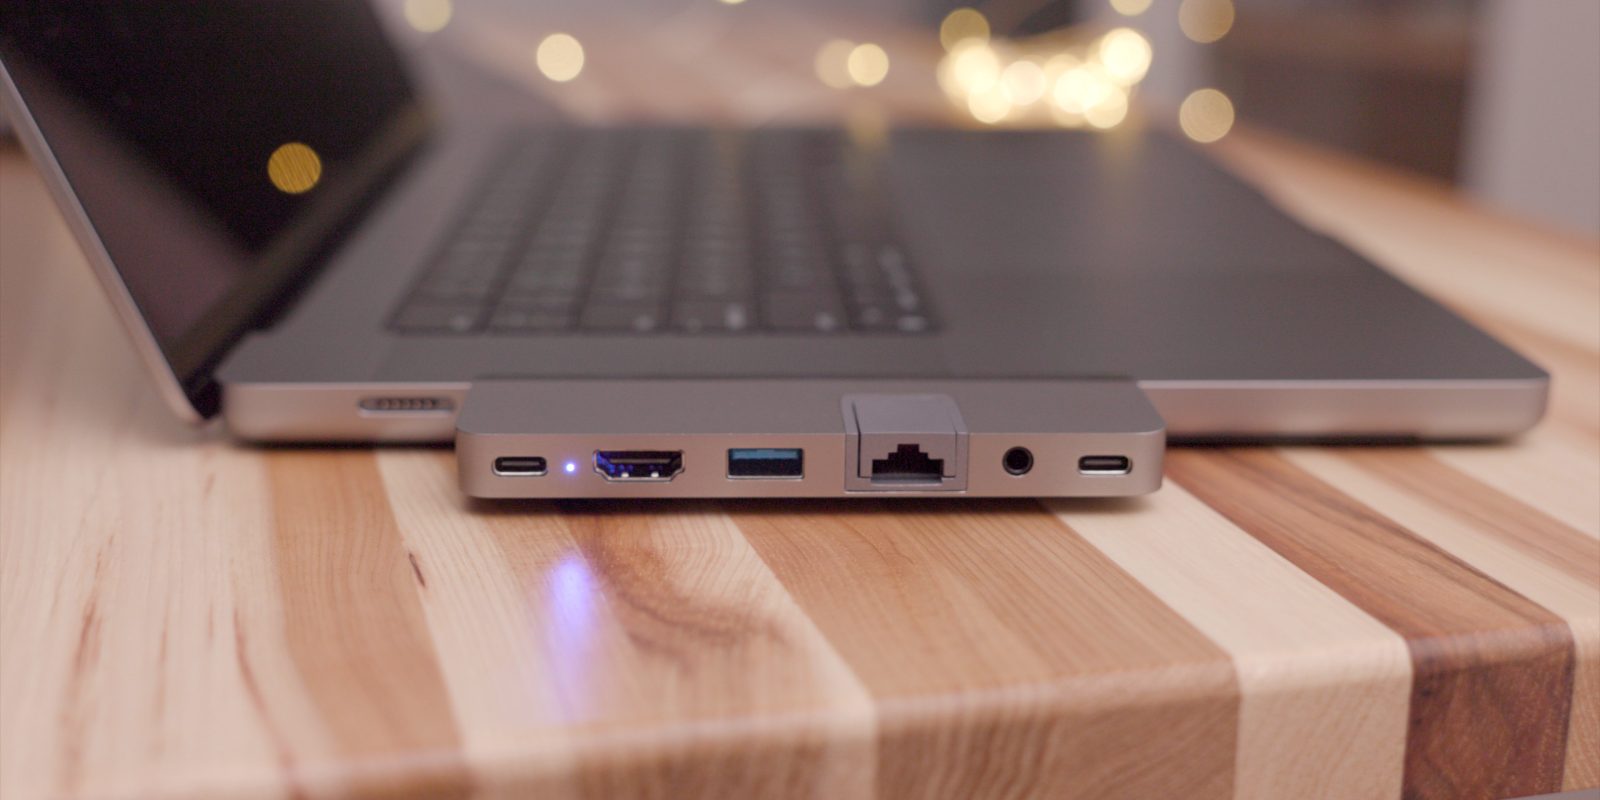 Hands-on: Duo Pro USB-C hub for MacBook [Video] - 9to5Mac